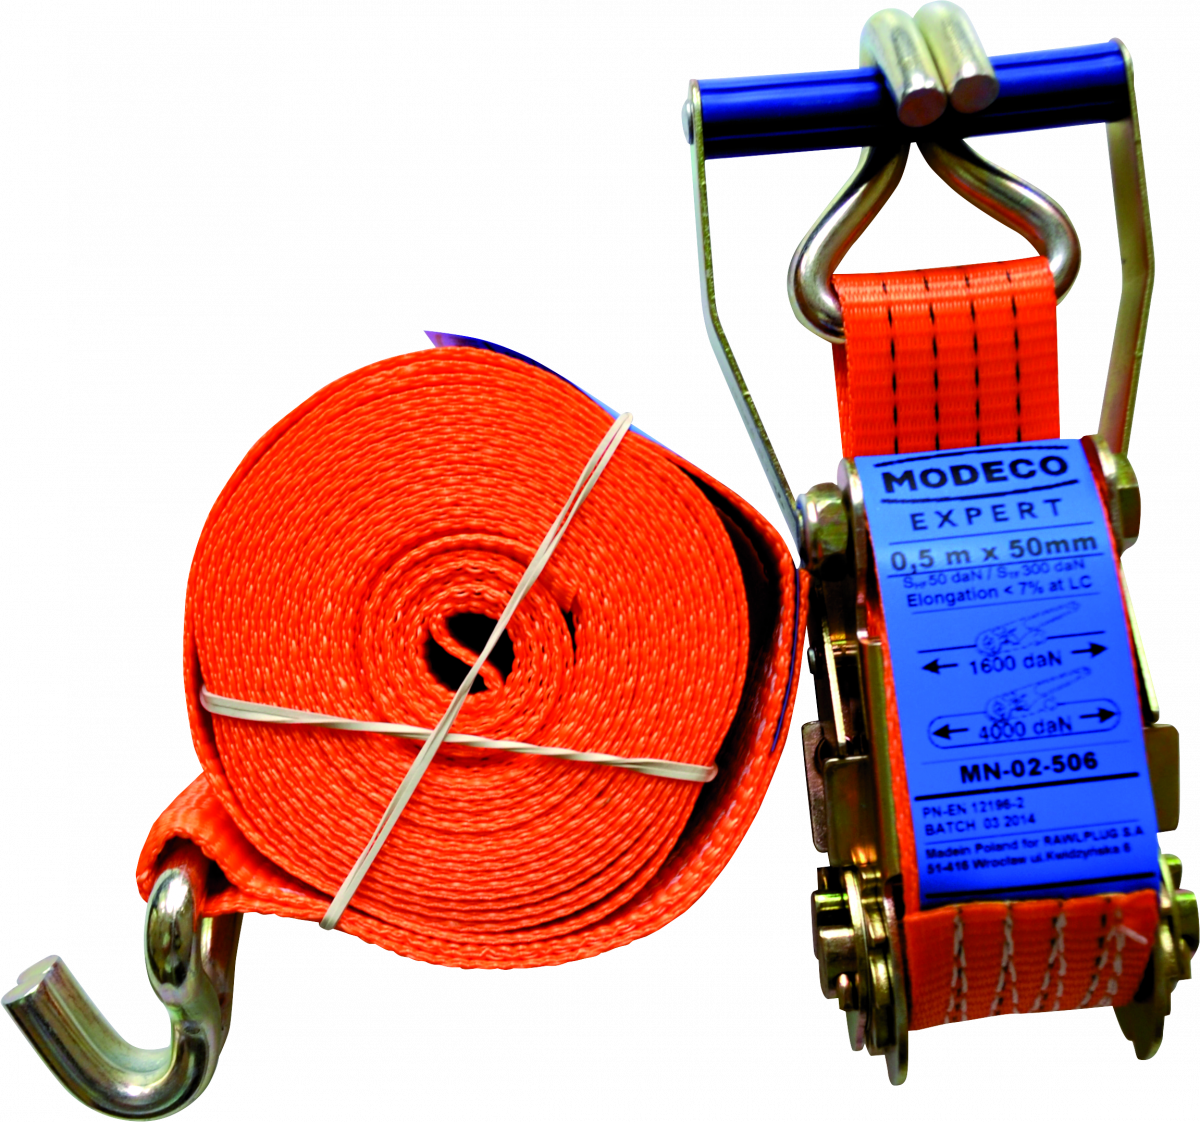 MN-02-50 Ratchet straps